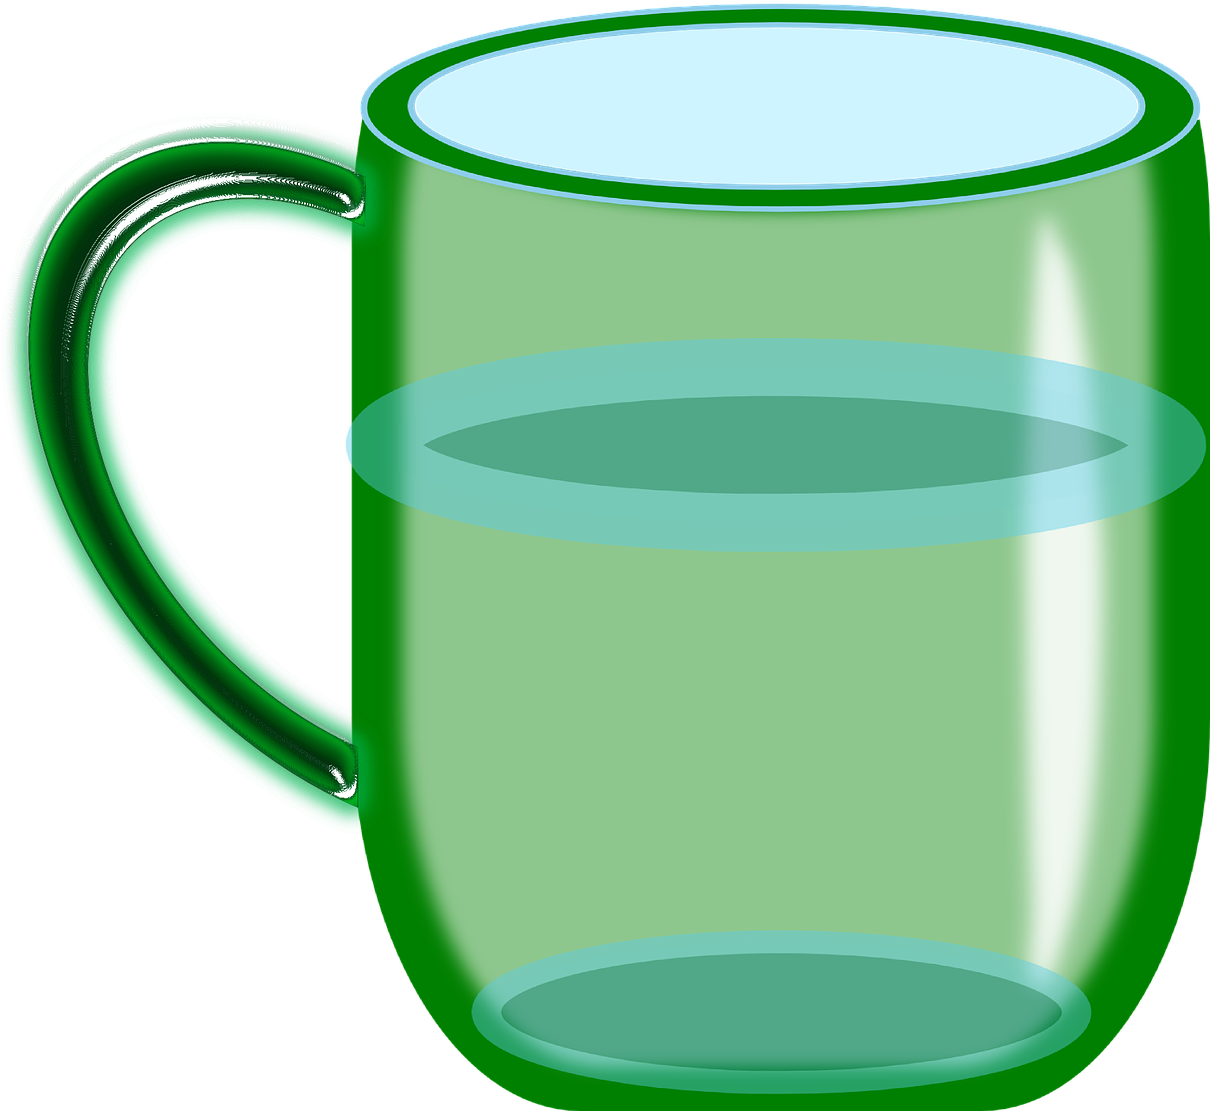 Green Glass Mug Fullof Water